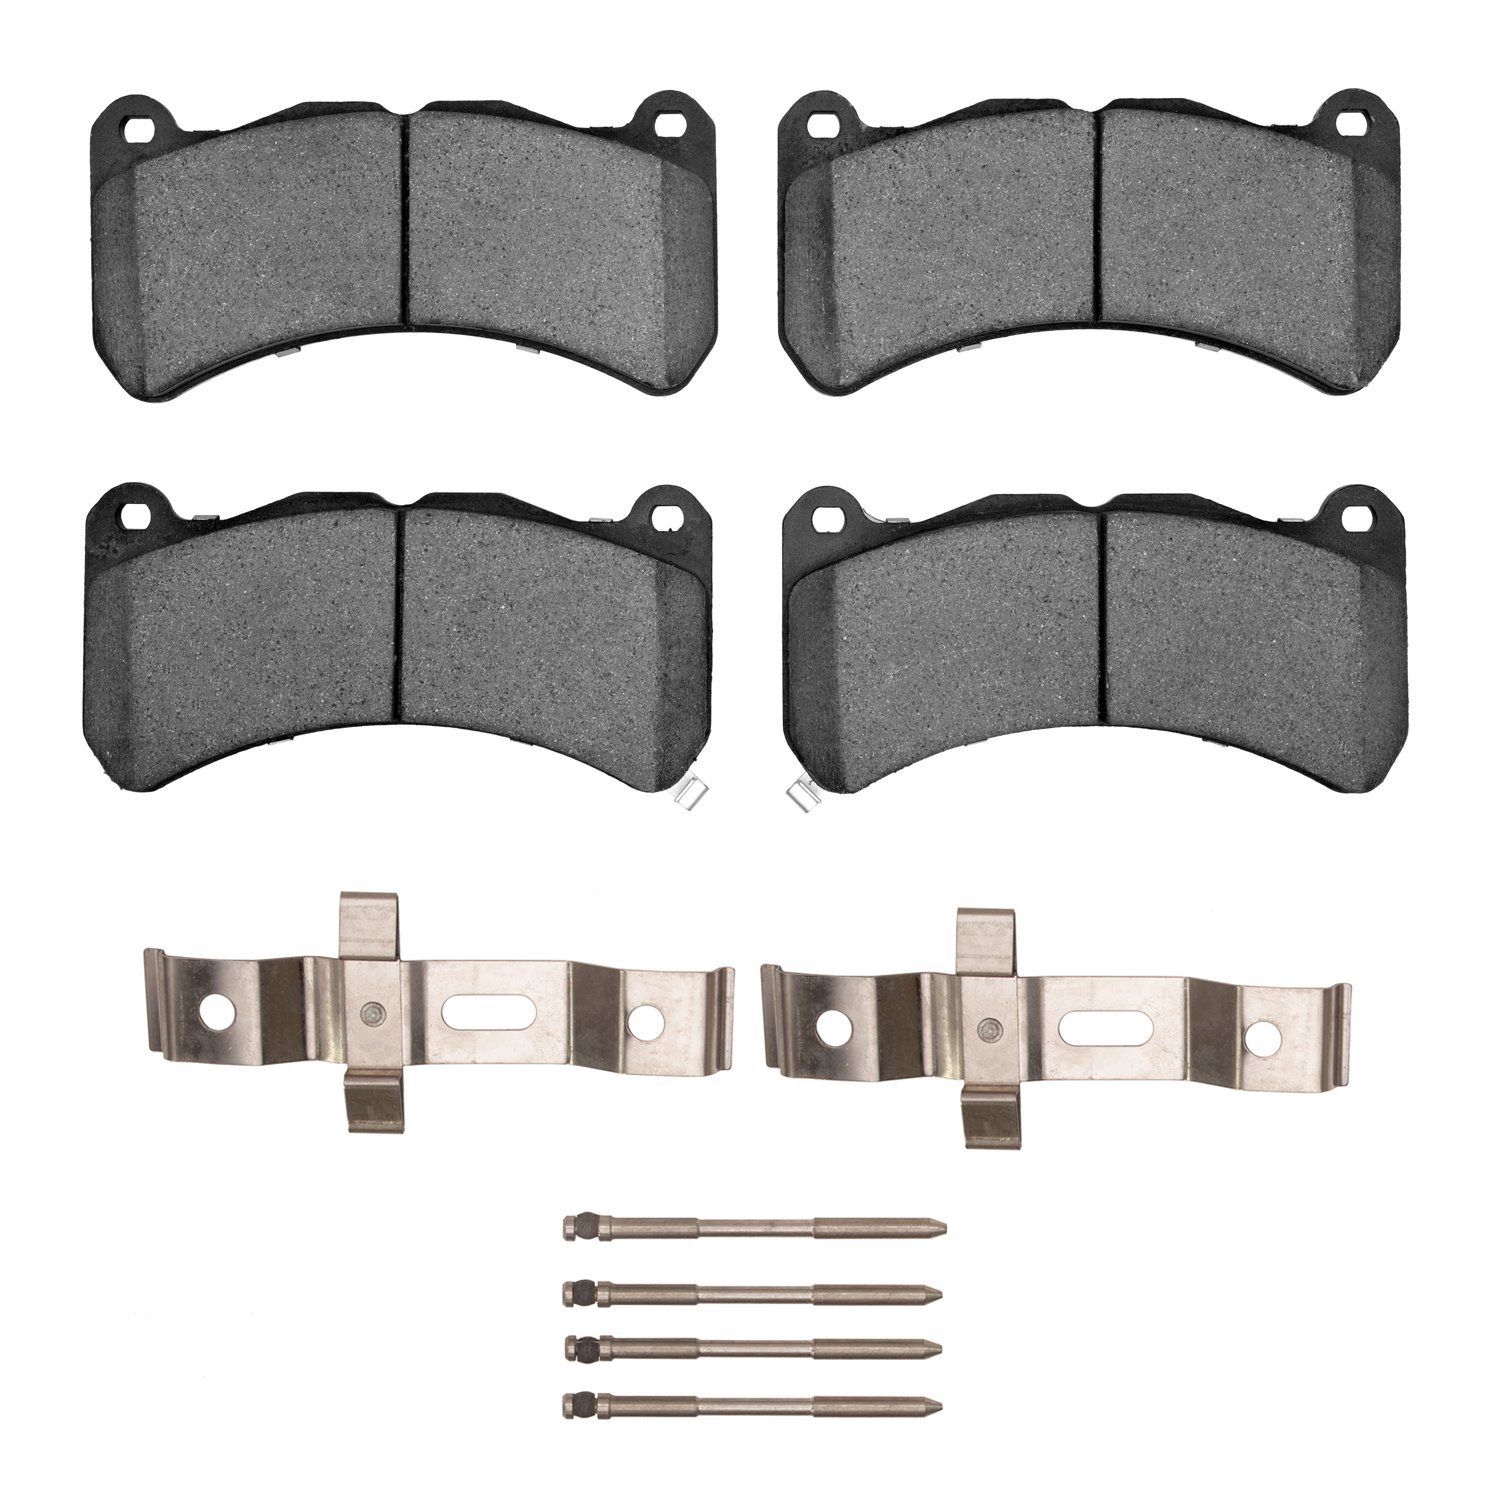 Semi-Metallic Brake Pads & Hardware Kit, 2008-2021 Fits Multiple Makes/Models, Position: Front